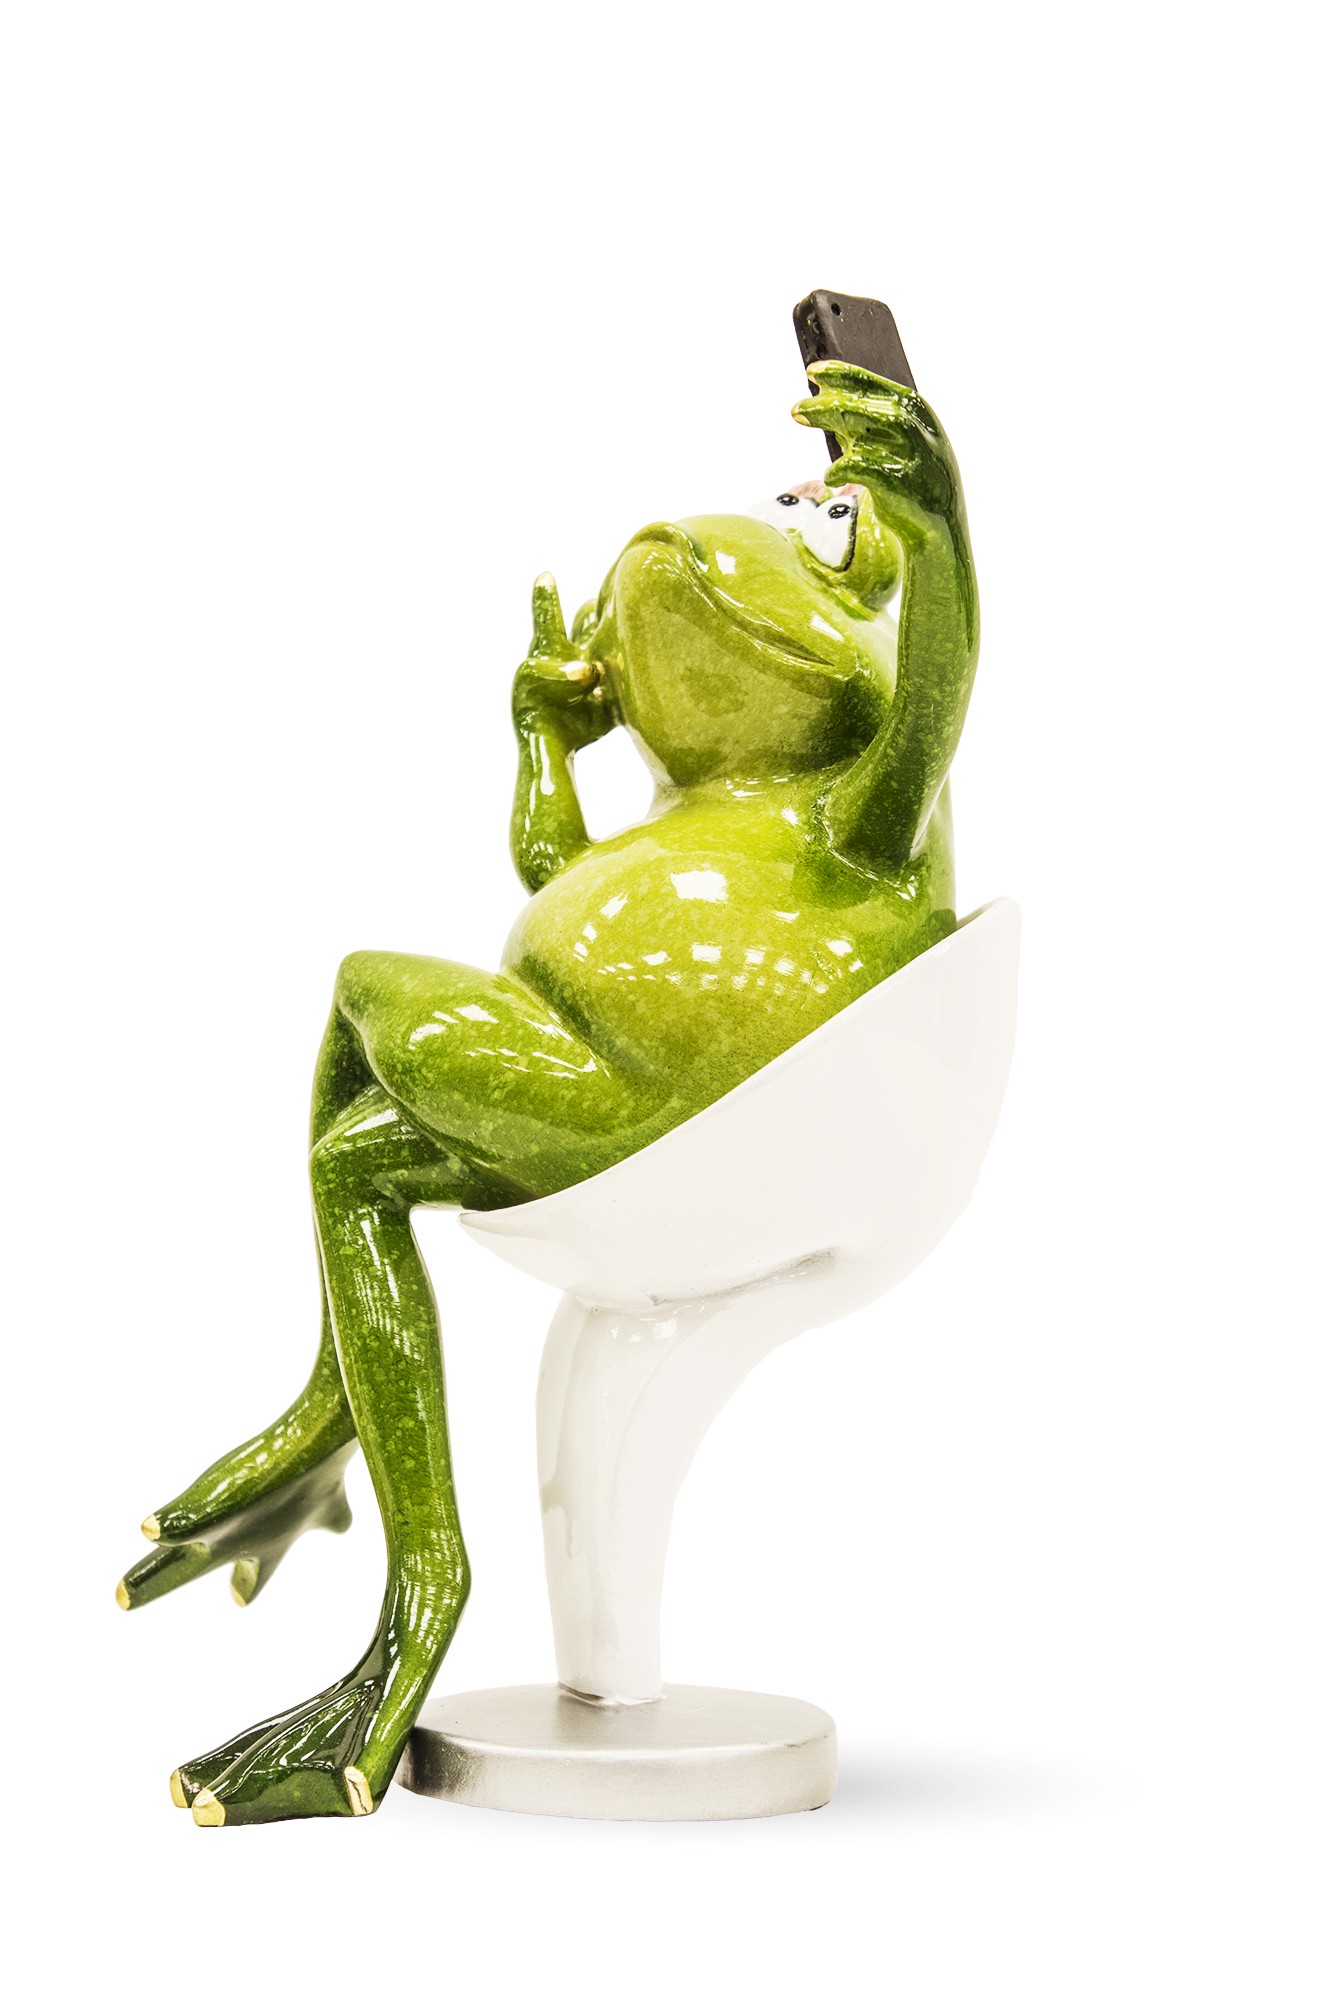 Frog Figurine on armchair doing selfie 118555